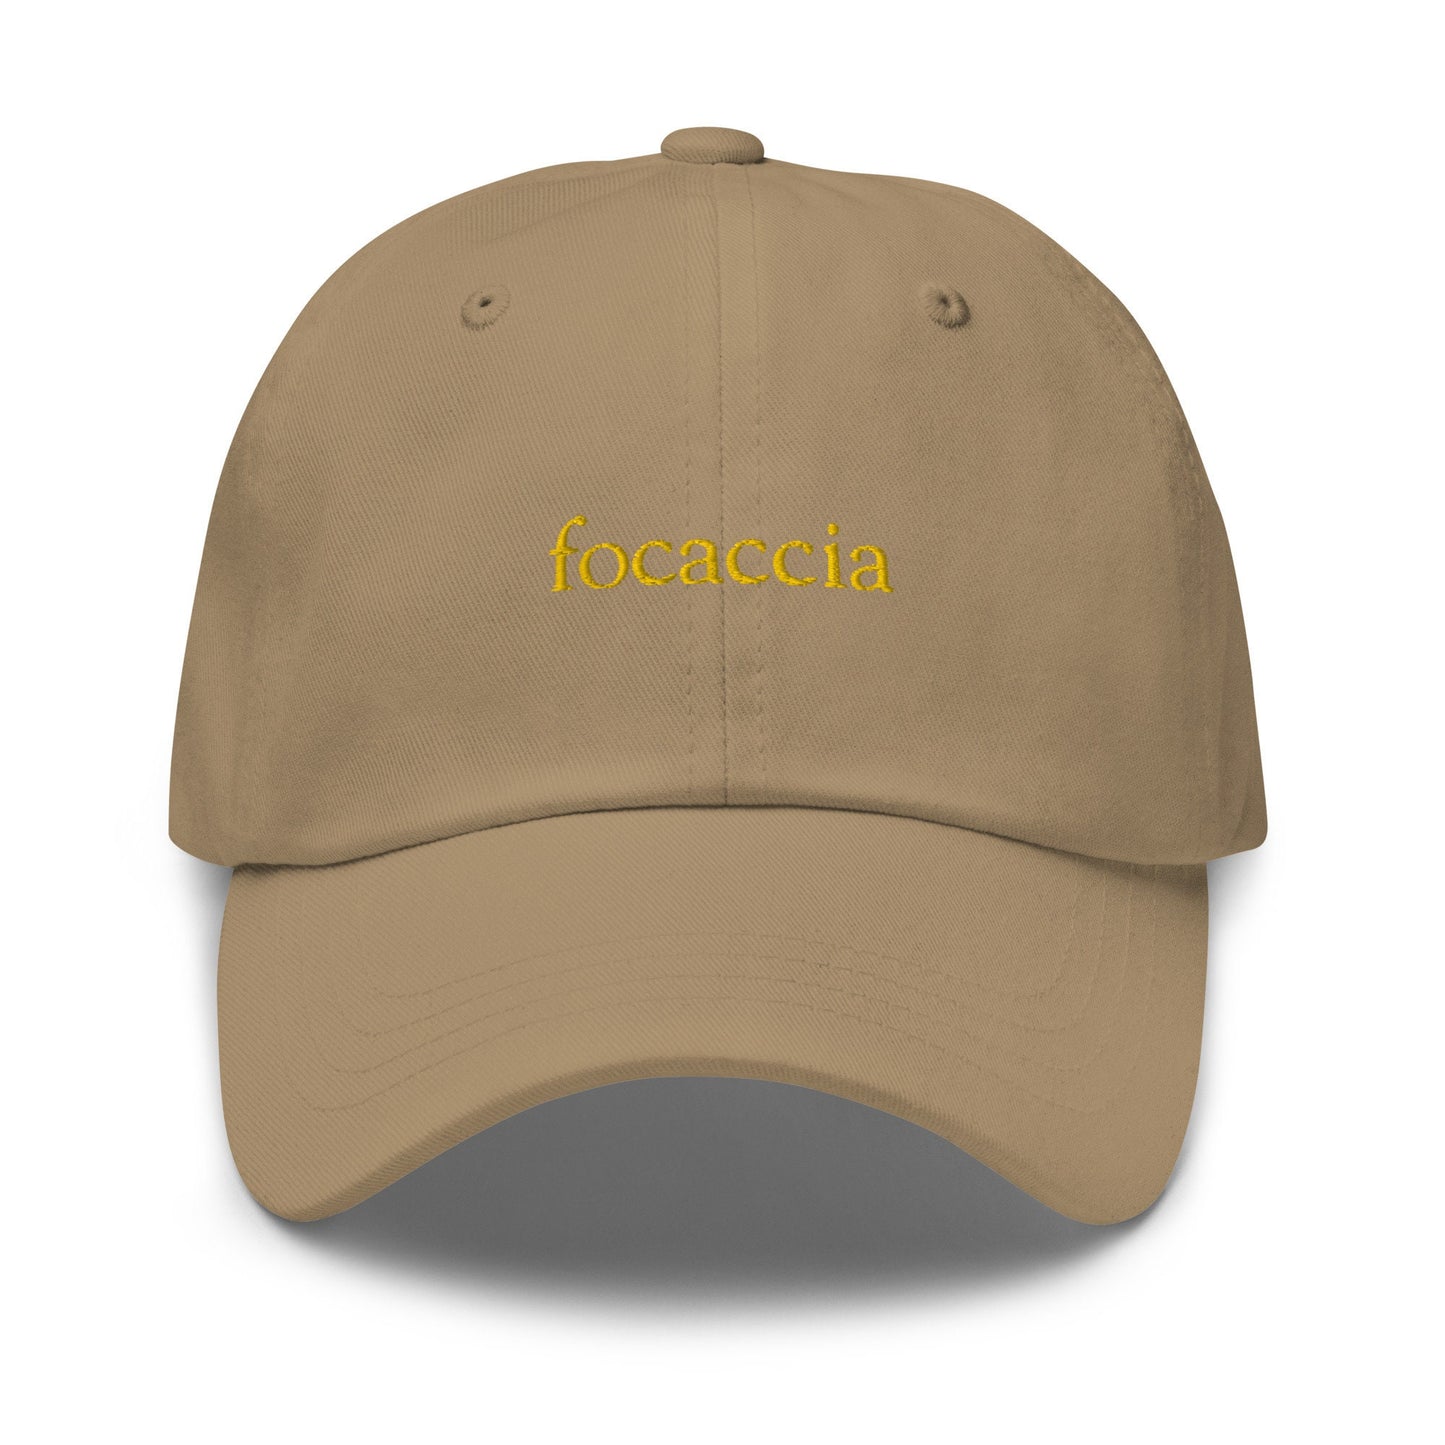 Focaccia Hat - Italian Bread Lovers - Minimalist Embroidered Staff Cotton Hat